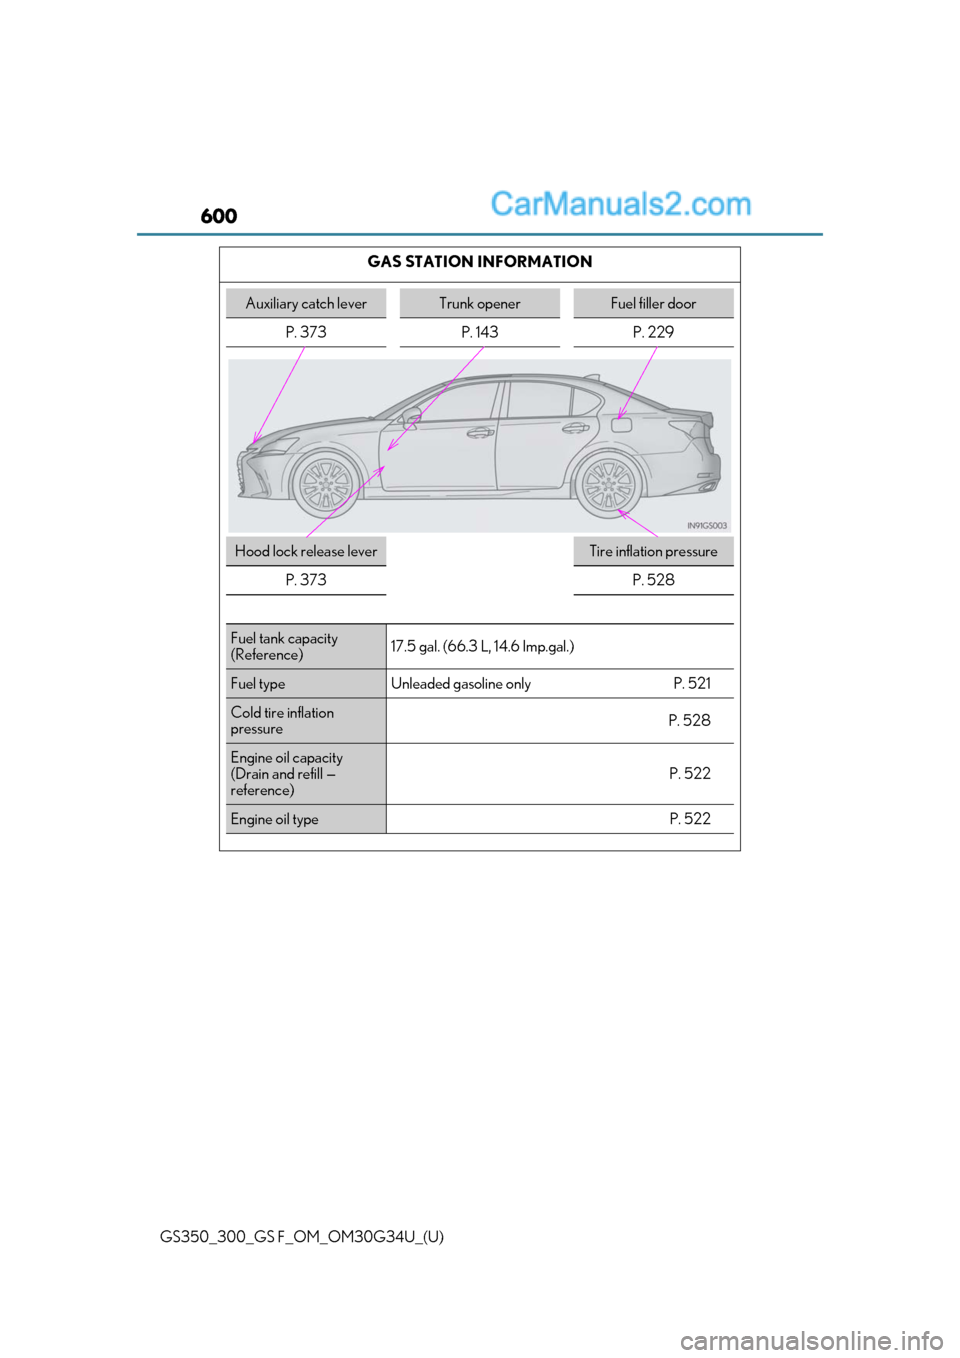 Lexus GS300 2018  s Owners Guide 600
GS350_300_GS F_OM_OM30G34U_(U)GAS STATION INFORMATION
Auxiliary catch leverTrunk openerFuel filler door
P. 373 P. 143 P. 229
Hood lock release leverTire inflation pressure
P. 373
P. 528
Fuel tank 